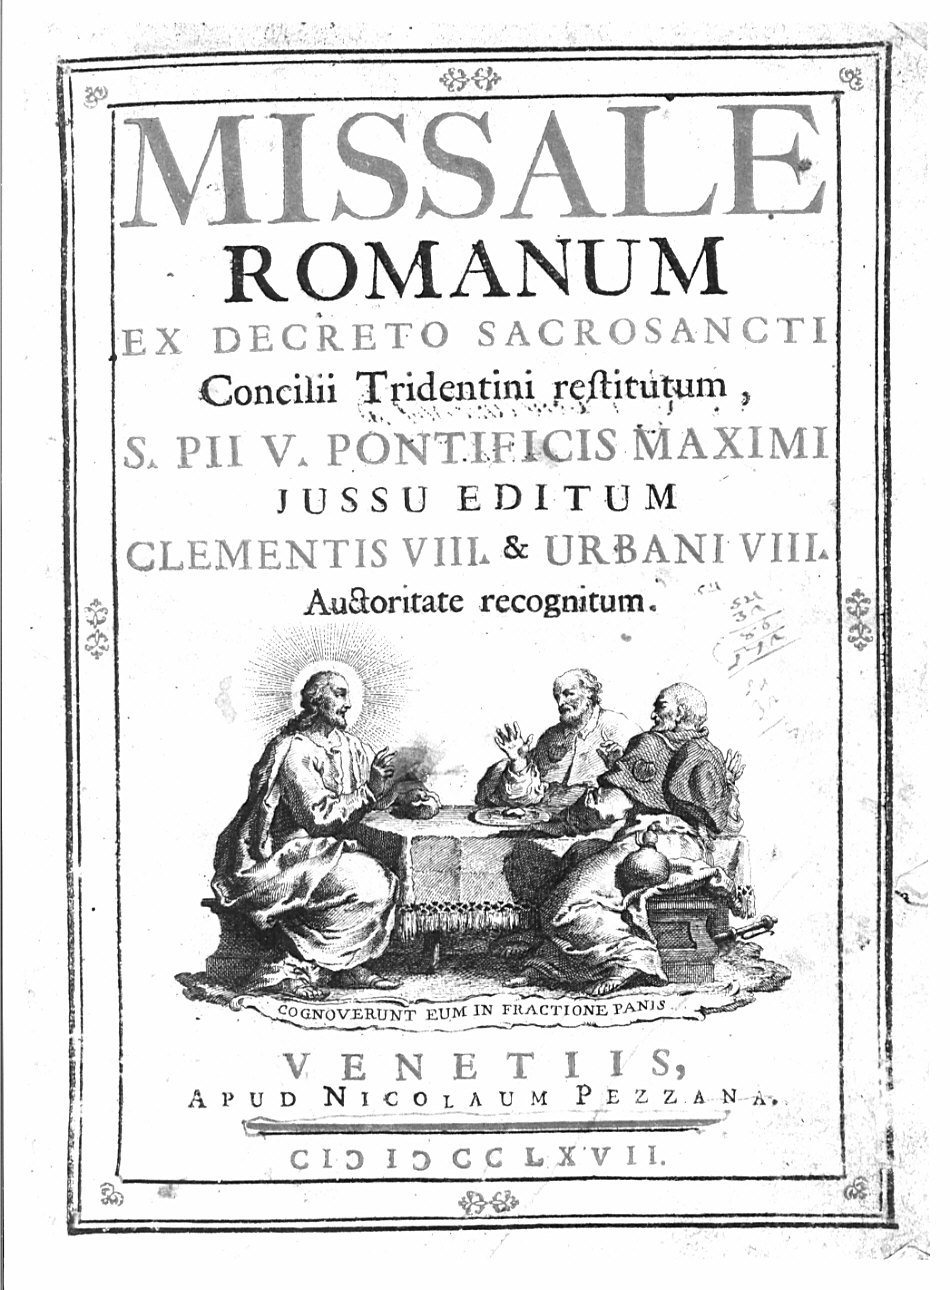 cena in Emmaus (stampa, elemento d'insieme) - ambito veneto (sec. XVIII)